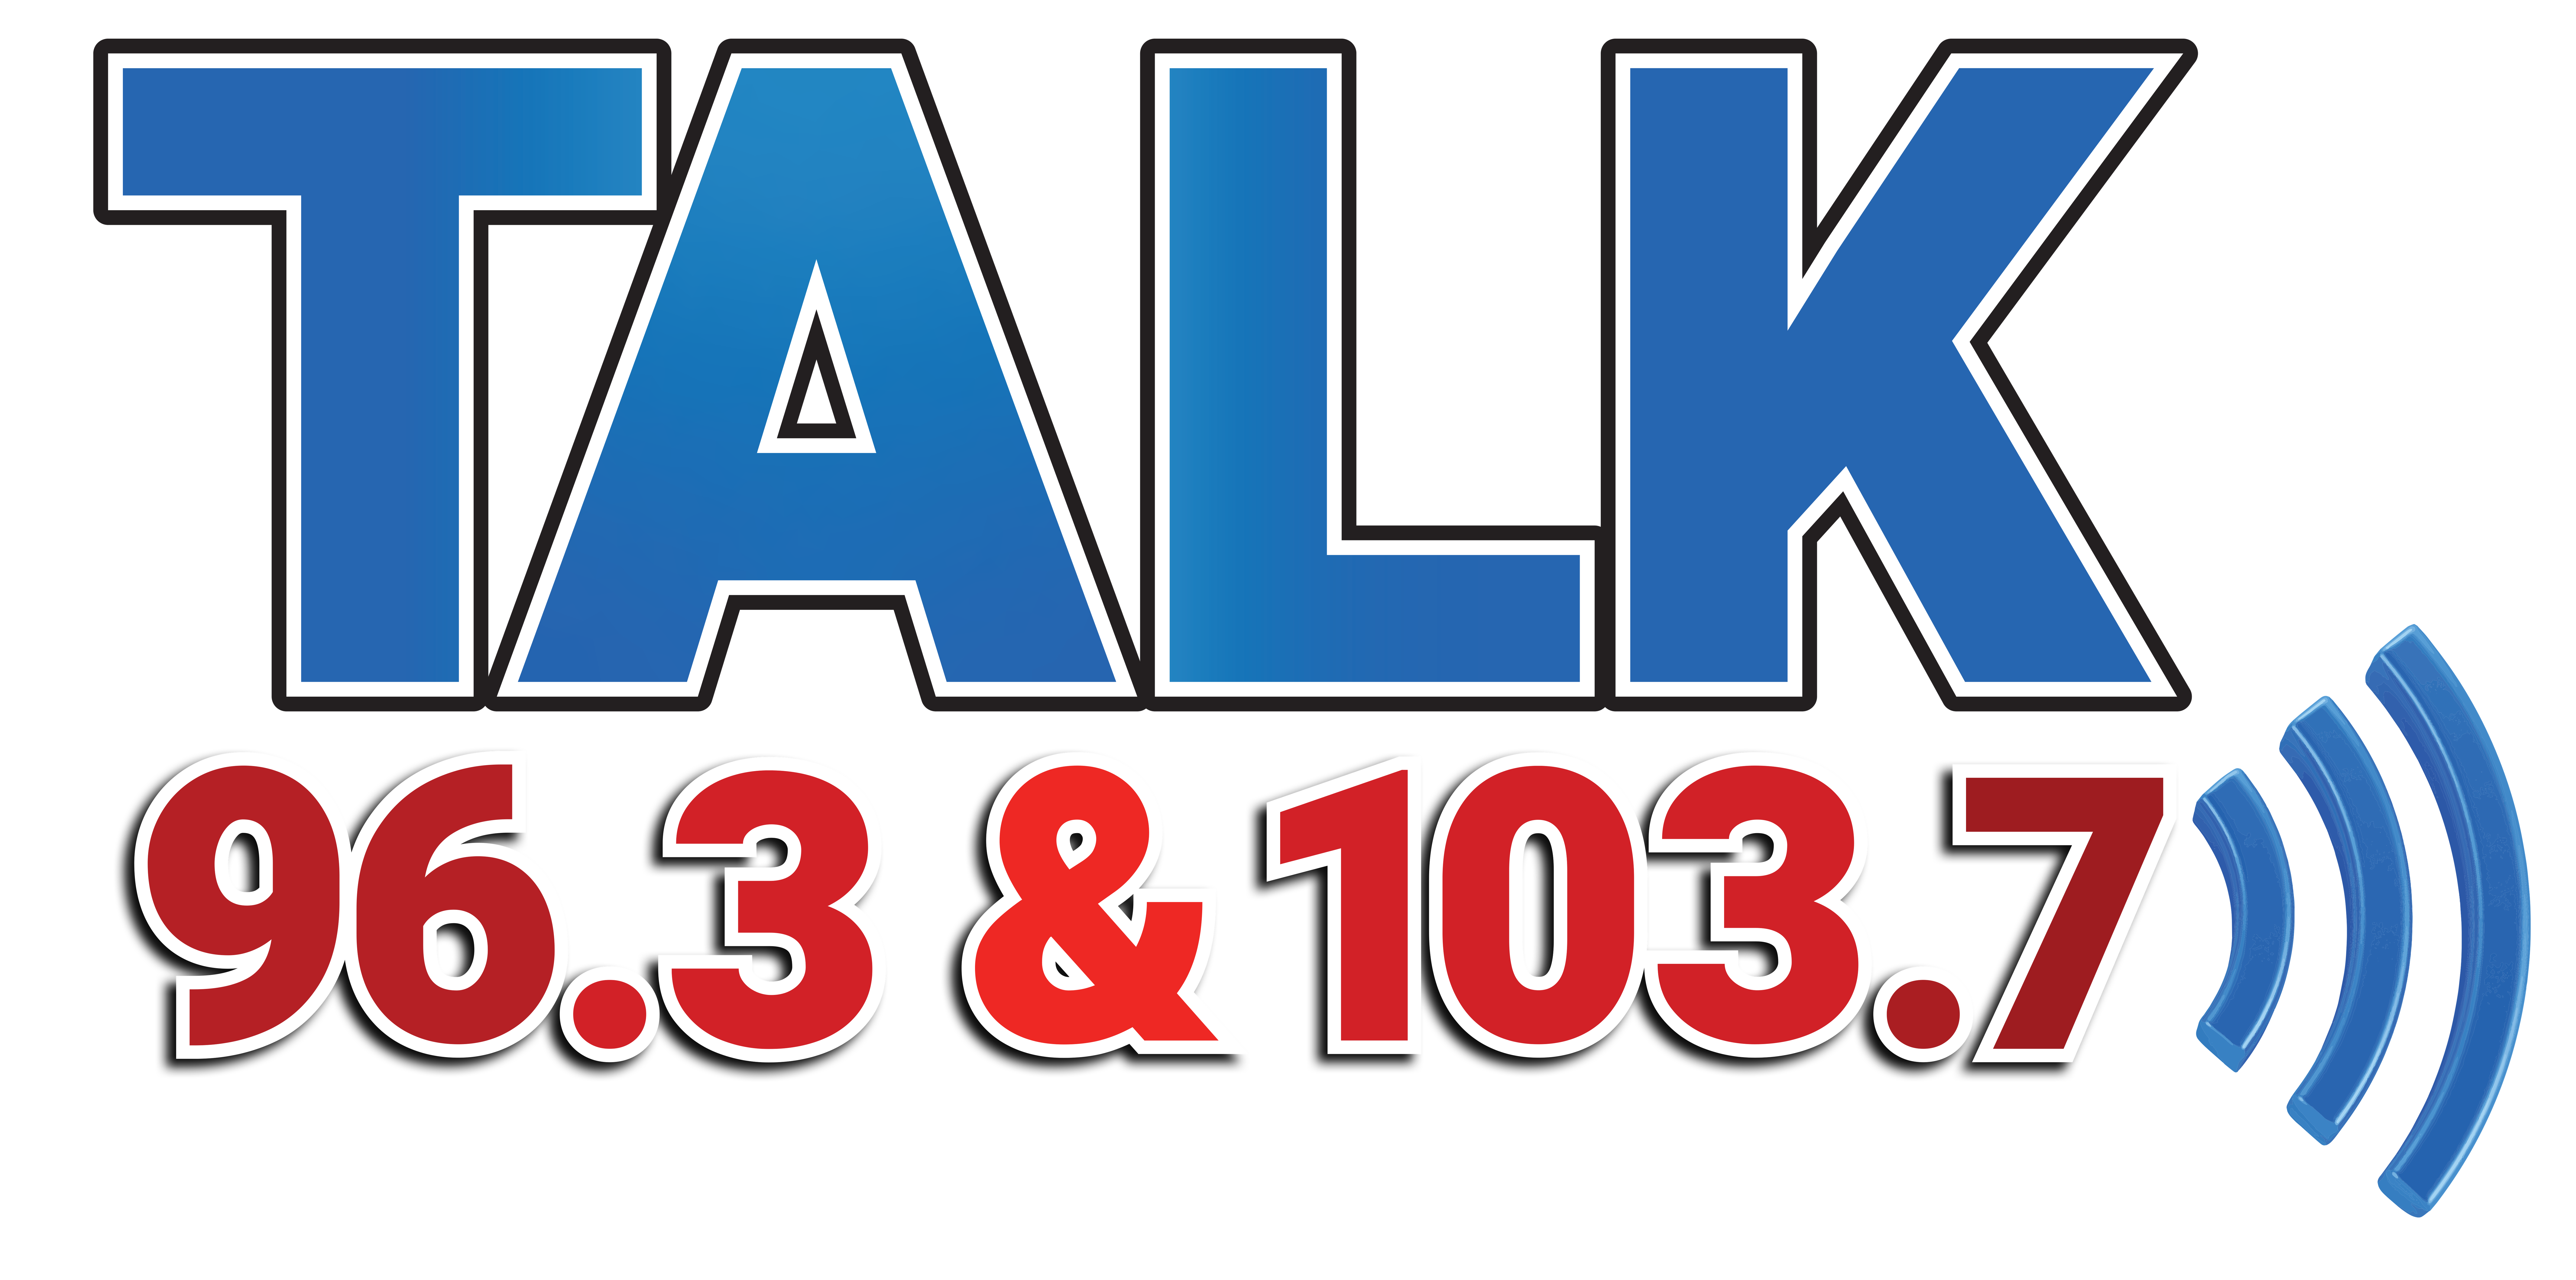 Talk Radio 96.3/103.7